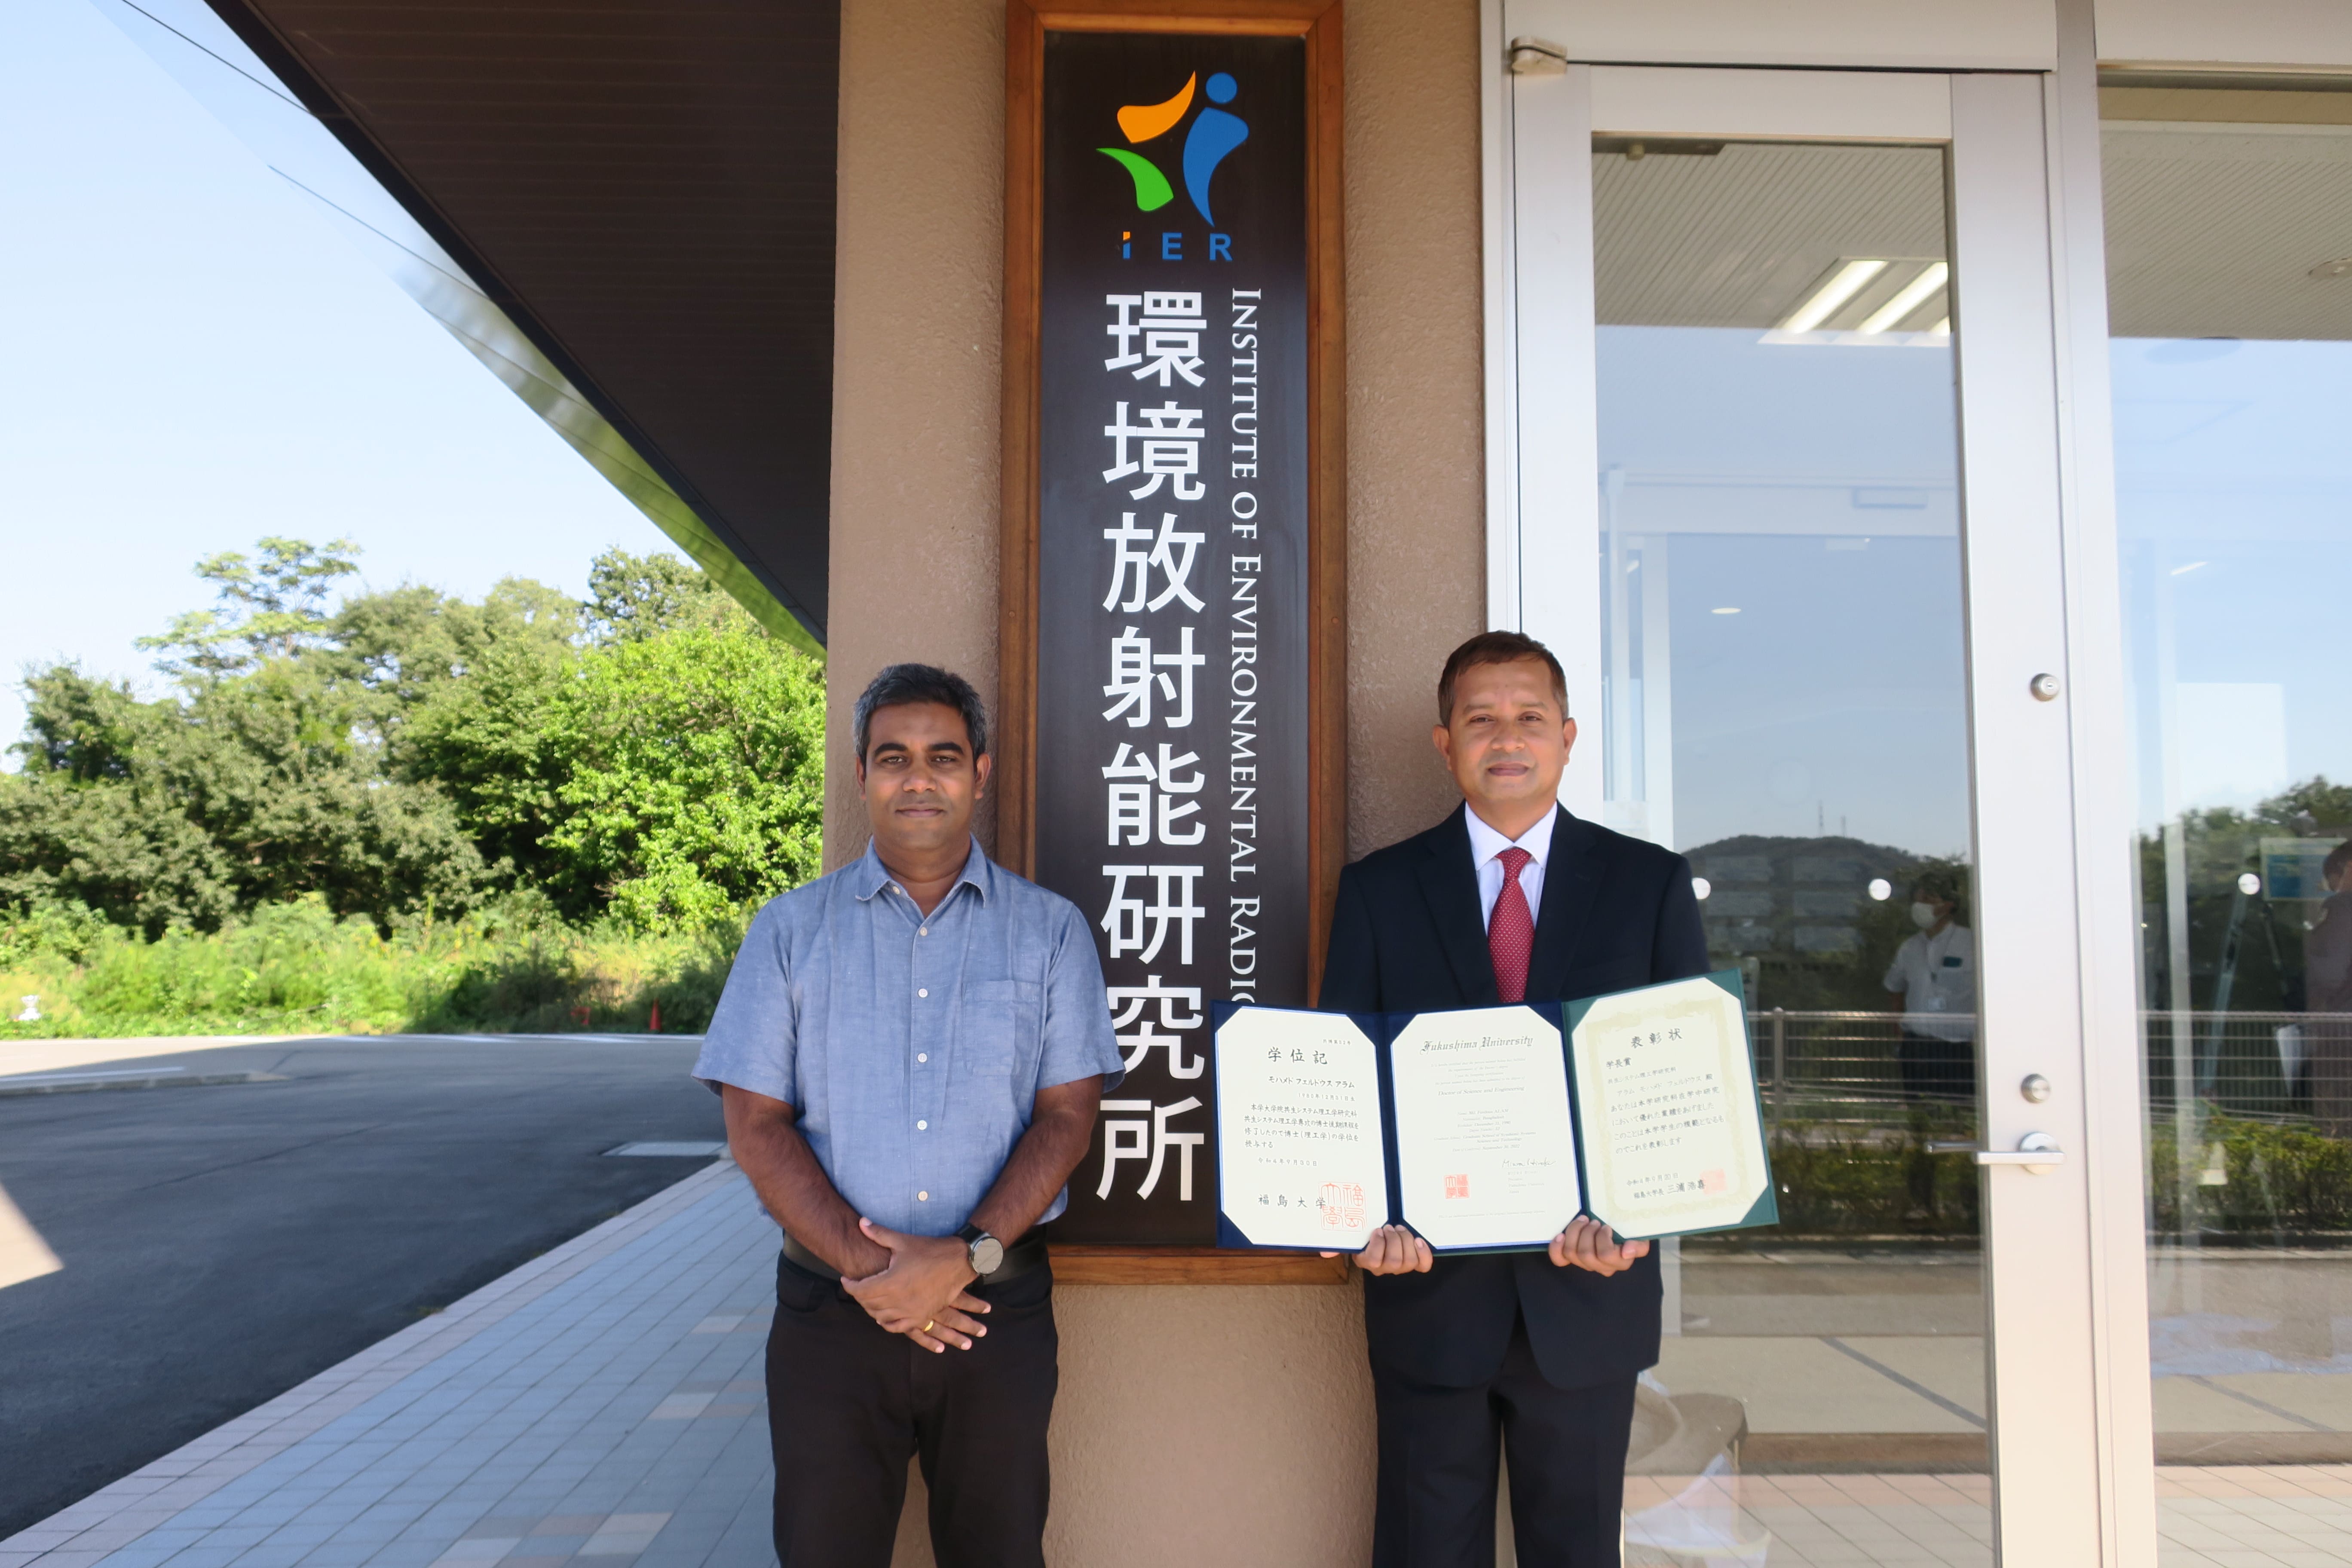 Associate Professor Rahman and Mr. Ferdous with his graduation certificates 